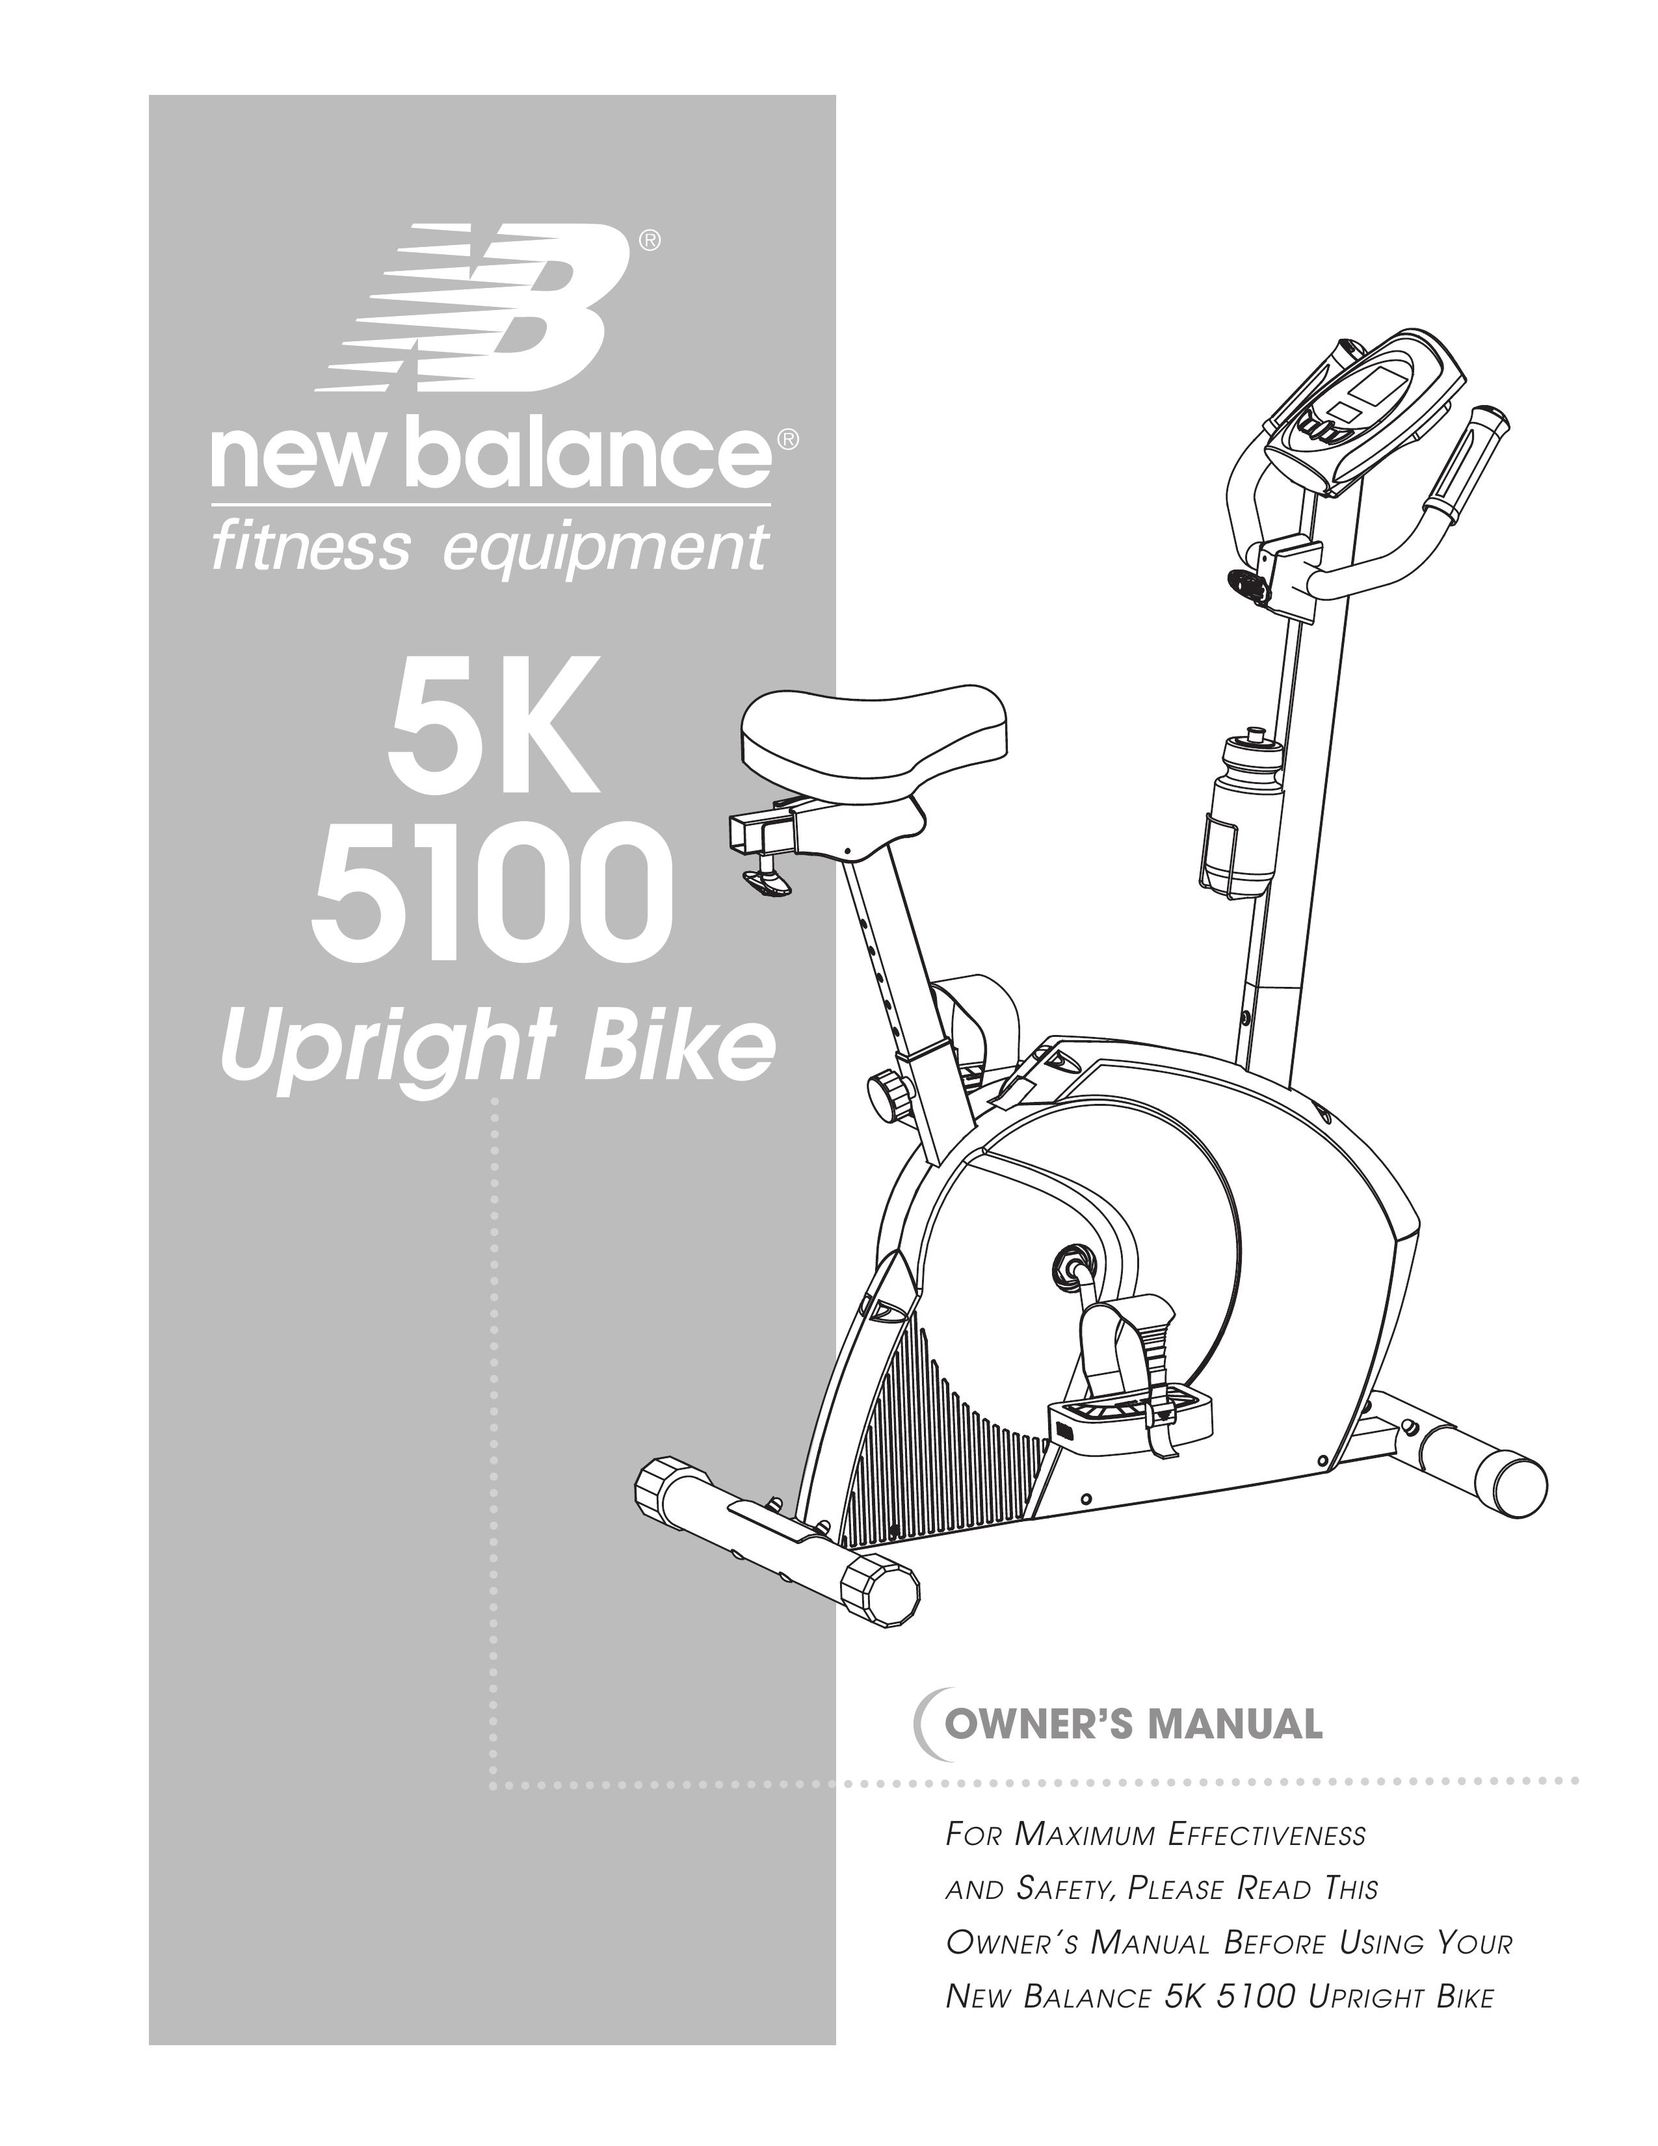 New Balance 5K 5100 Home Gym User Manual